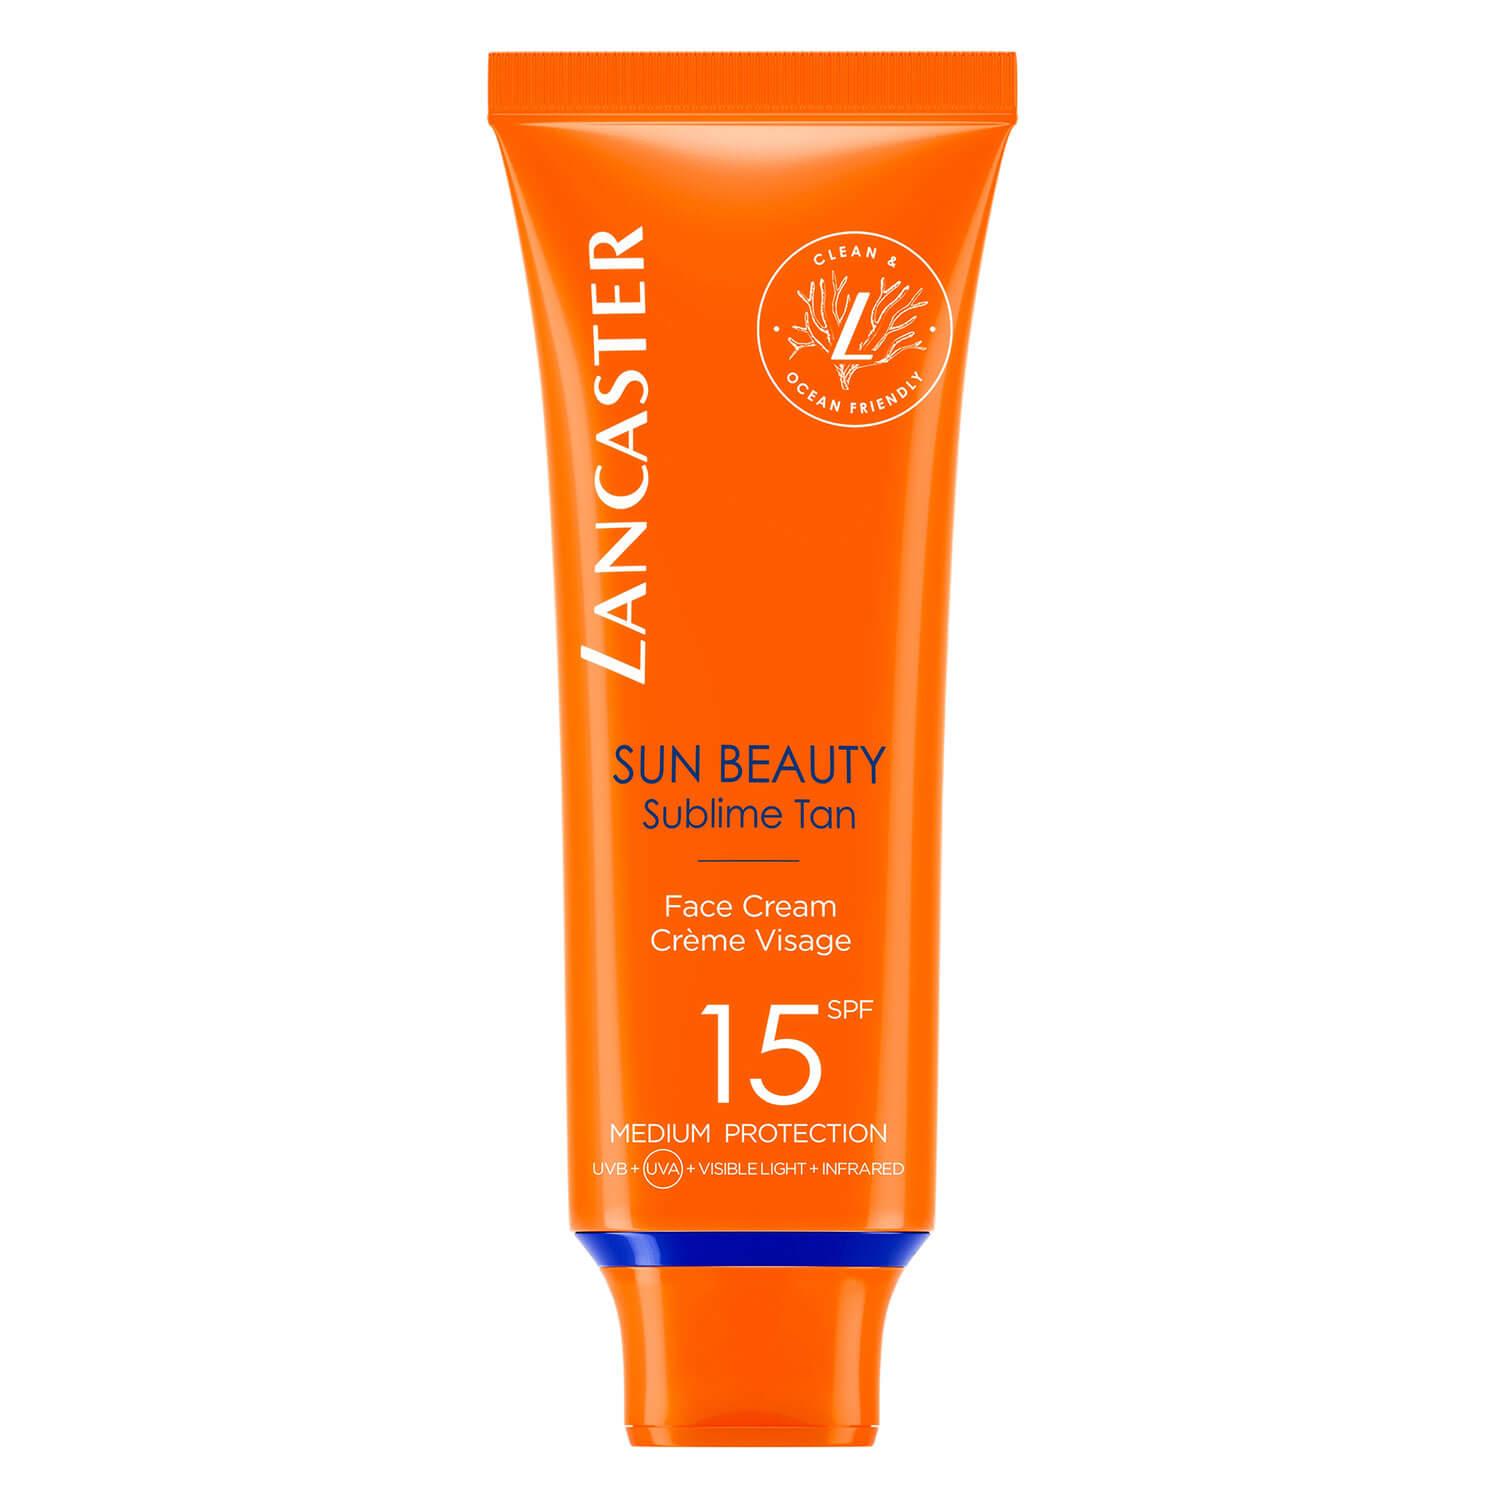 Sun Beauty - Sublime Tan Face Cream SPF15